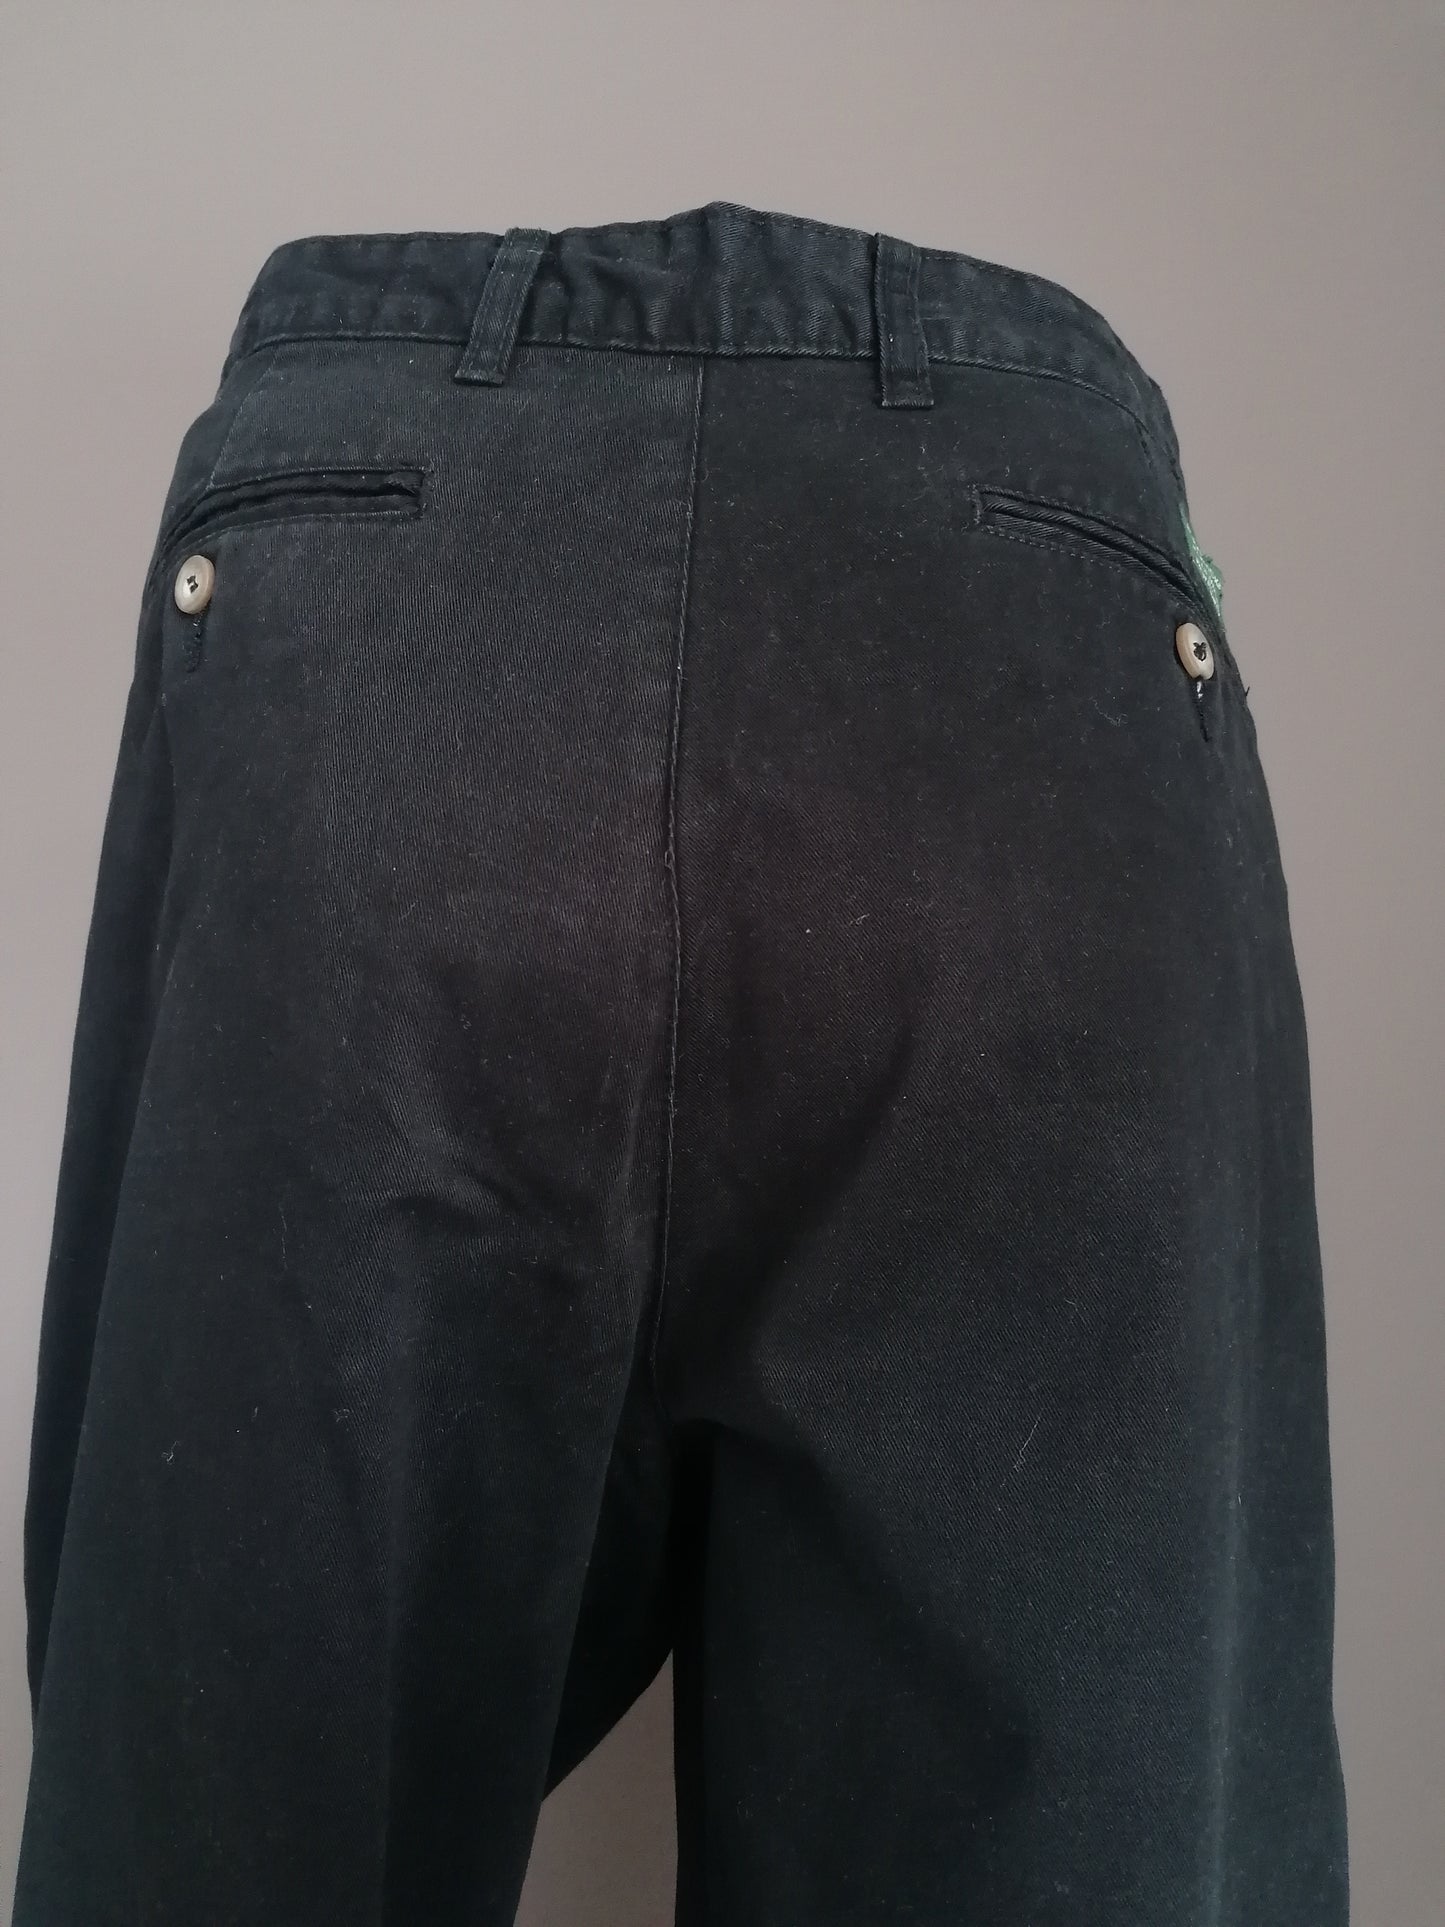 Maverick Jeans. Black colored. Size W36 - L32. High waist!!